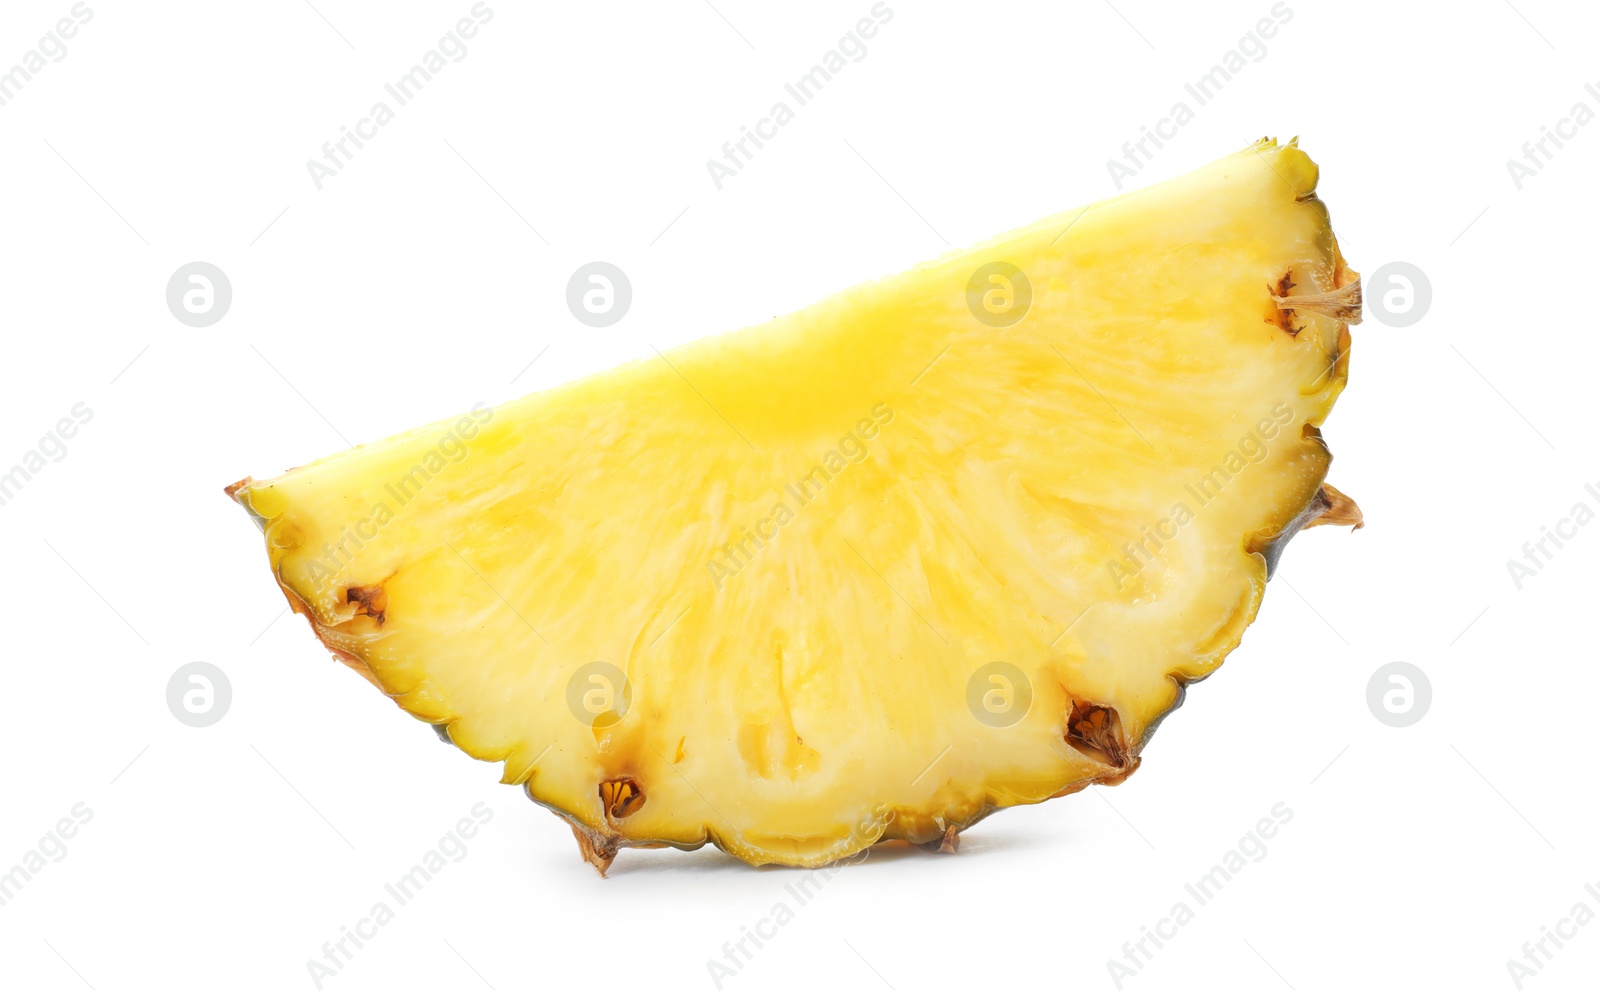 Photo of Slice of tasty juicy pineapple on white background